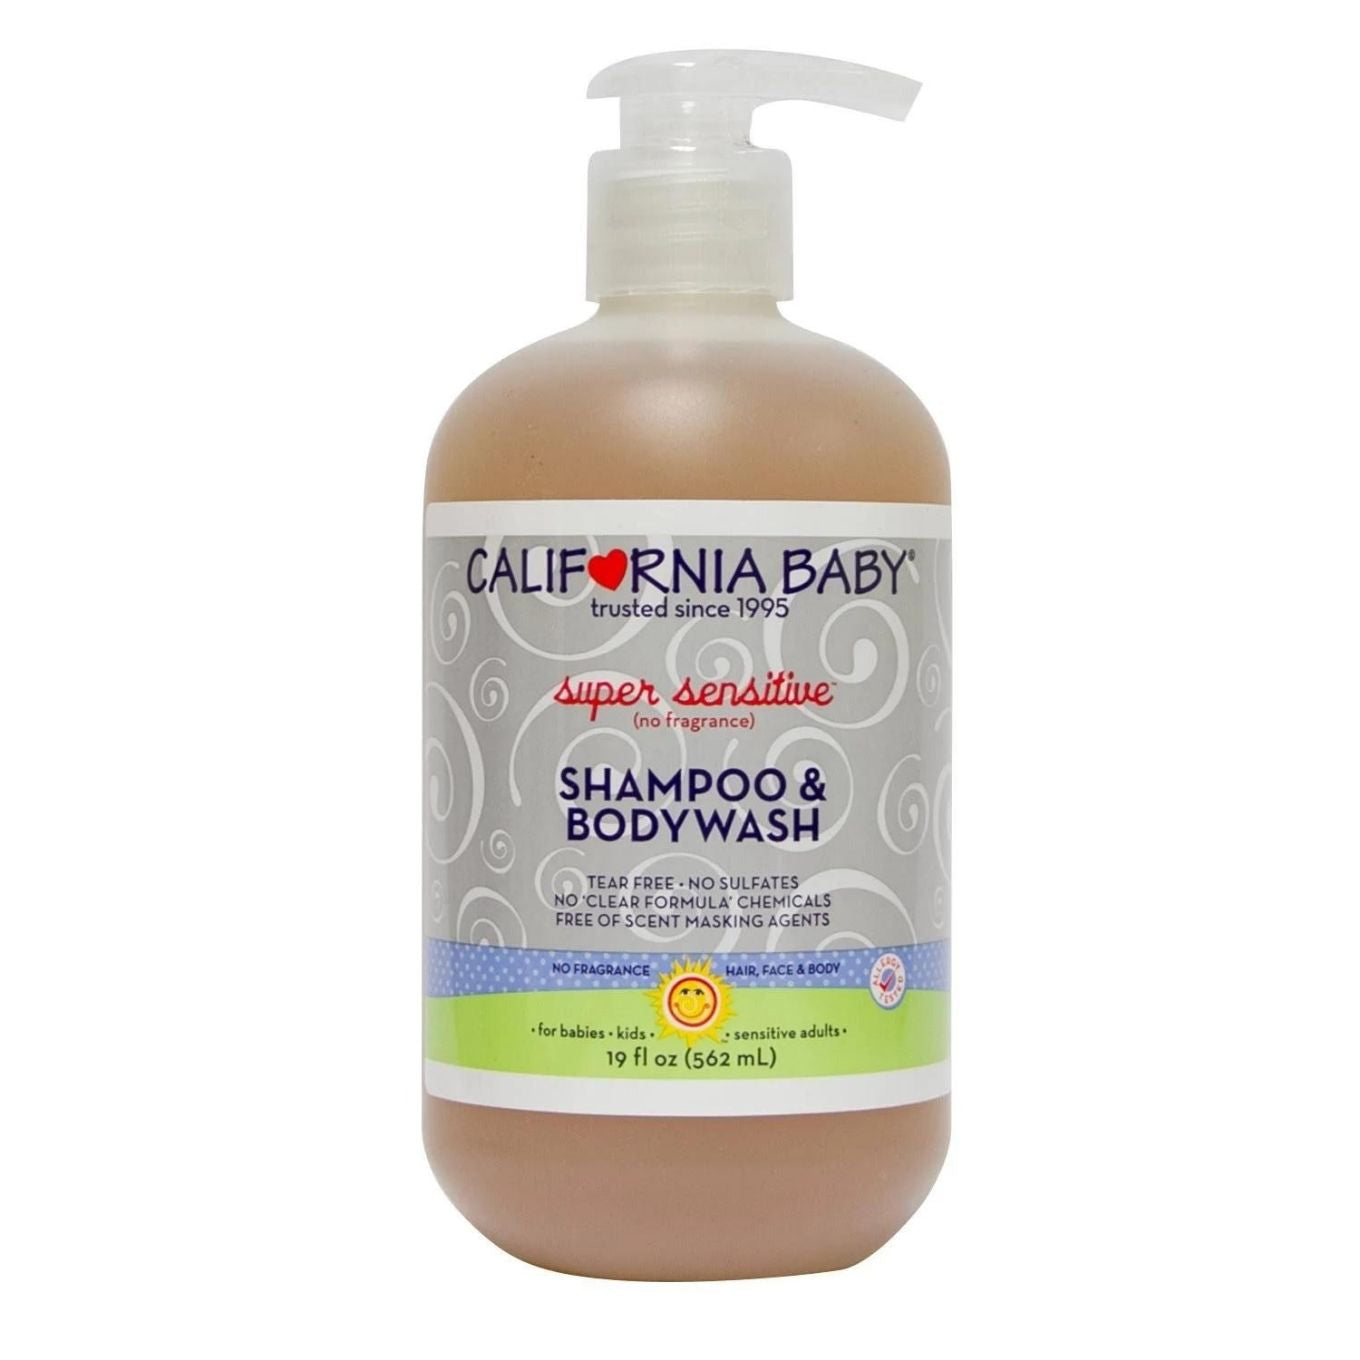 Image of California Baby Super Sensitive Shampoo and Body Wash 